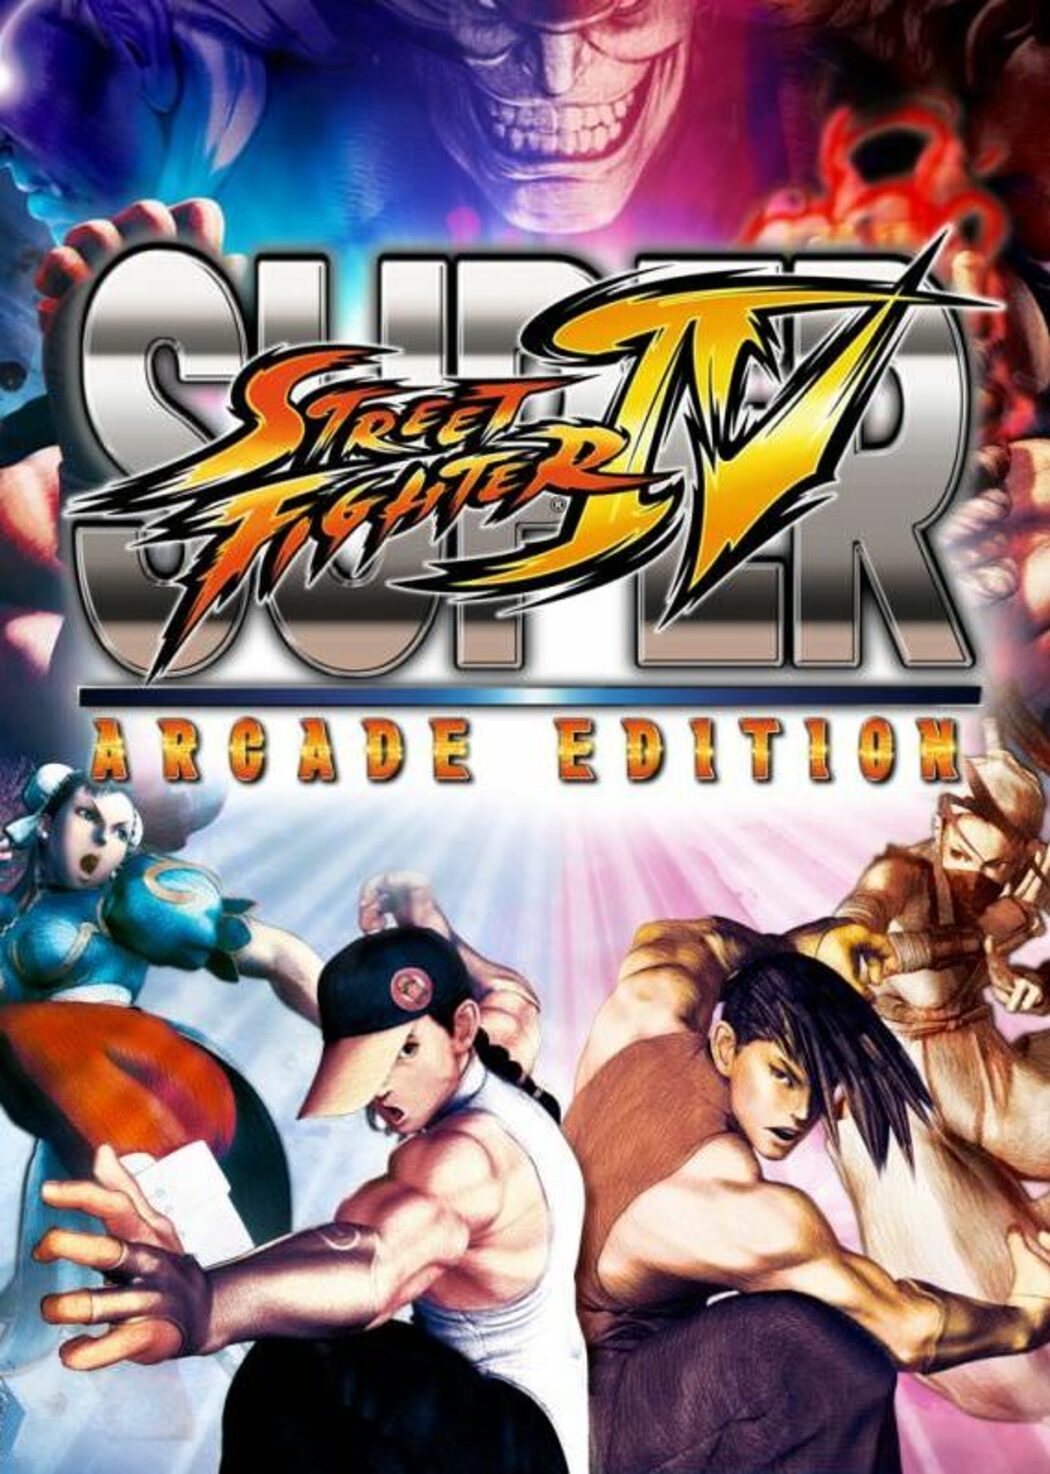 Buy cheap Street Fighter IV cd key - lowest price